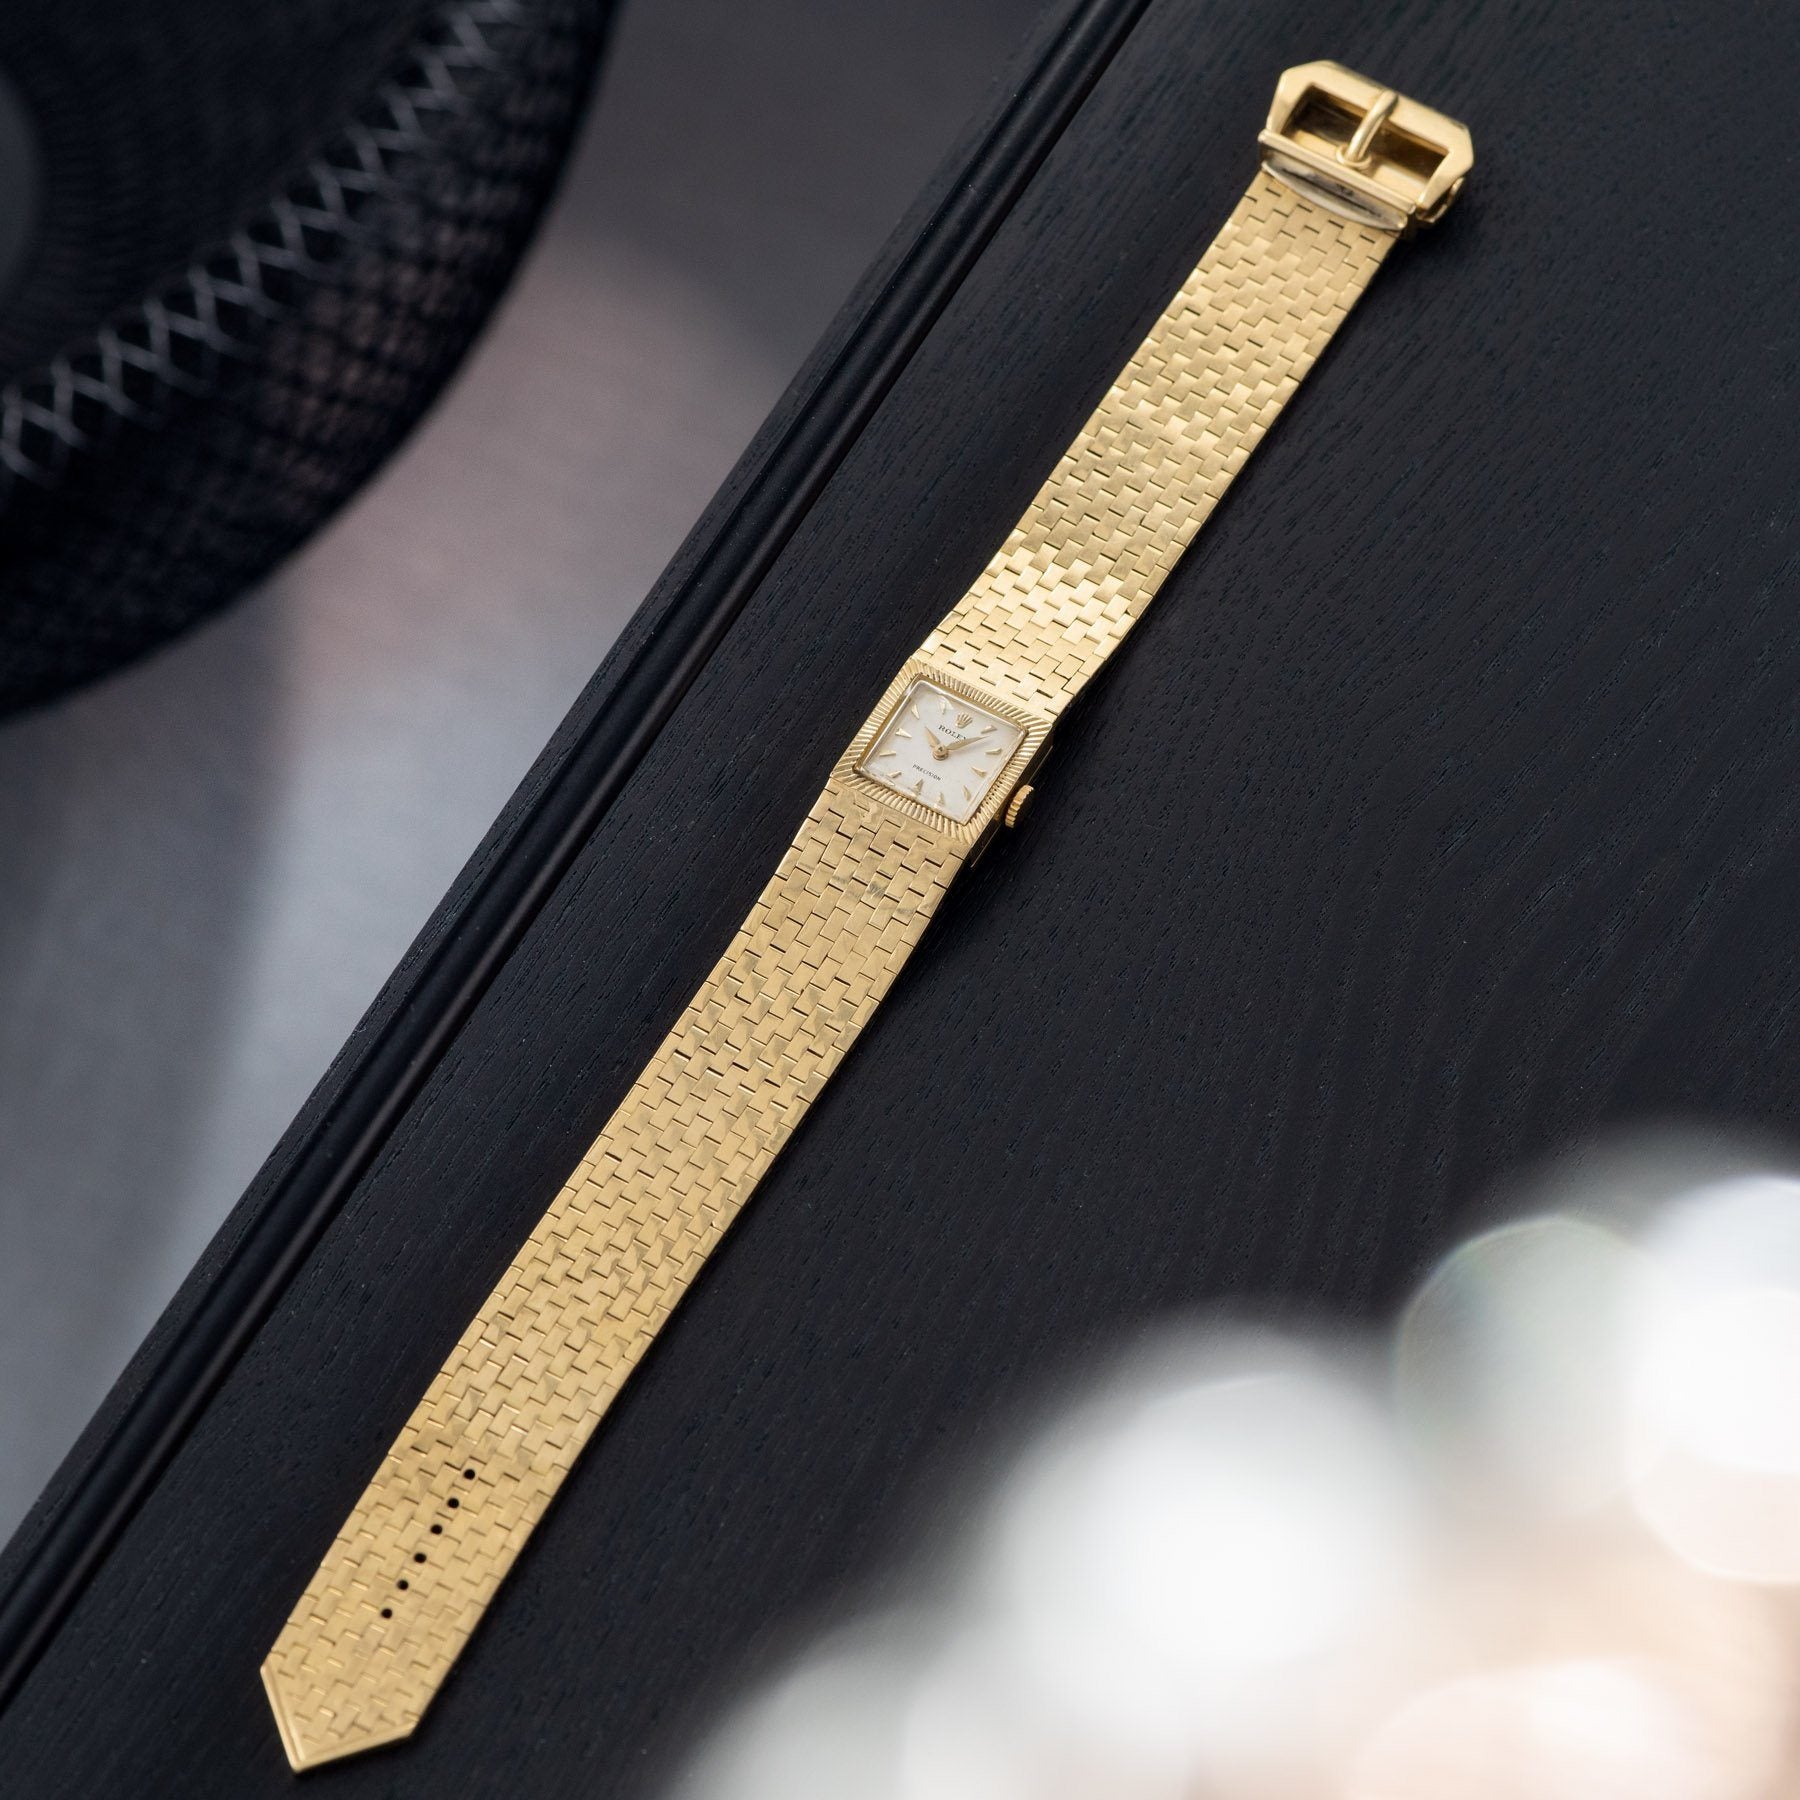 Rolex Precision 18kt Yellow Gold Ref 8209 with a 9-row brick bracelet